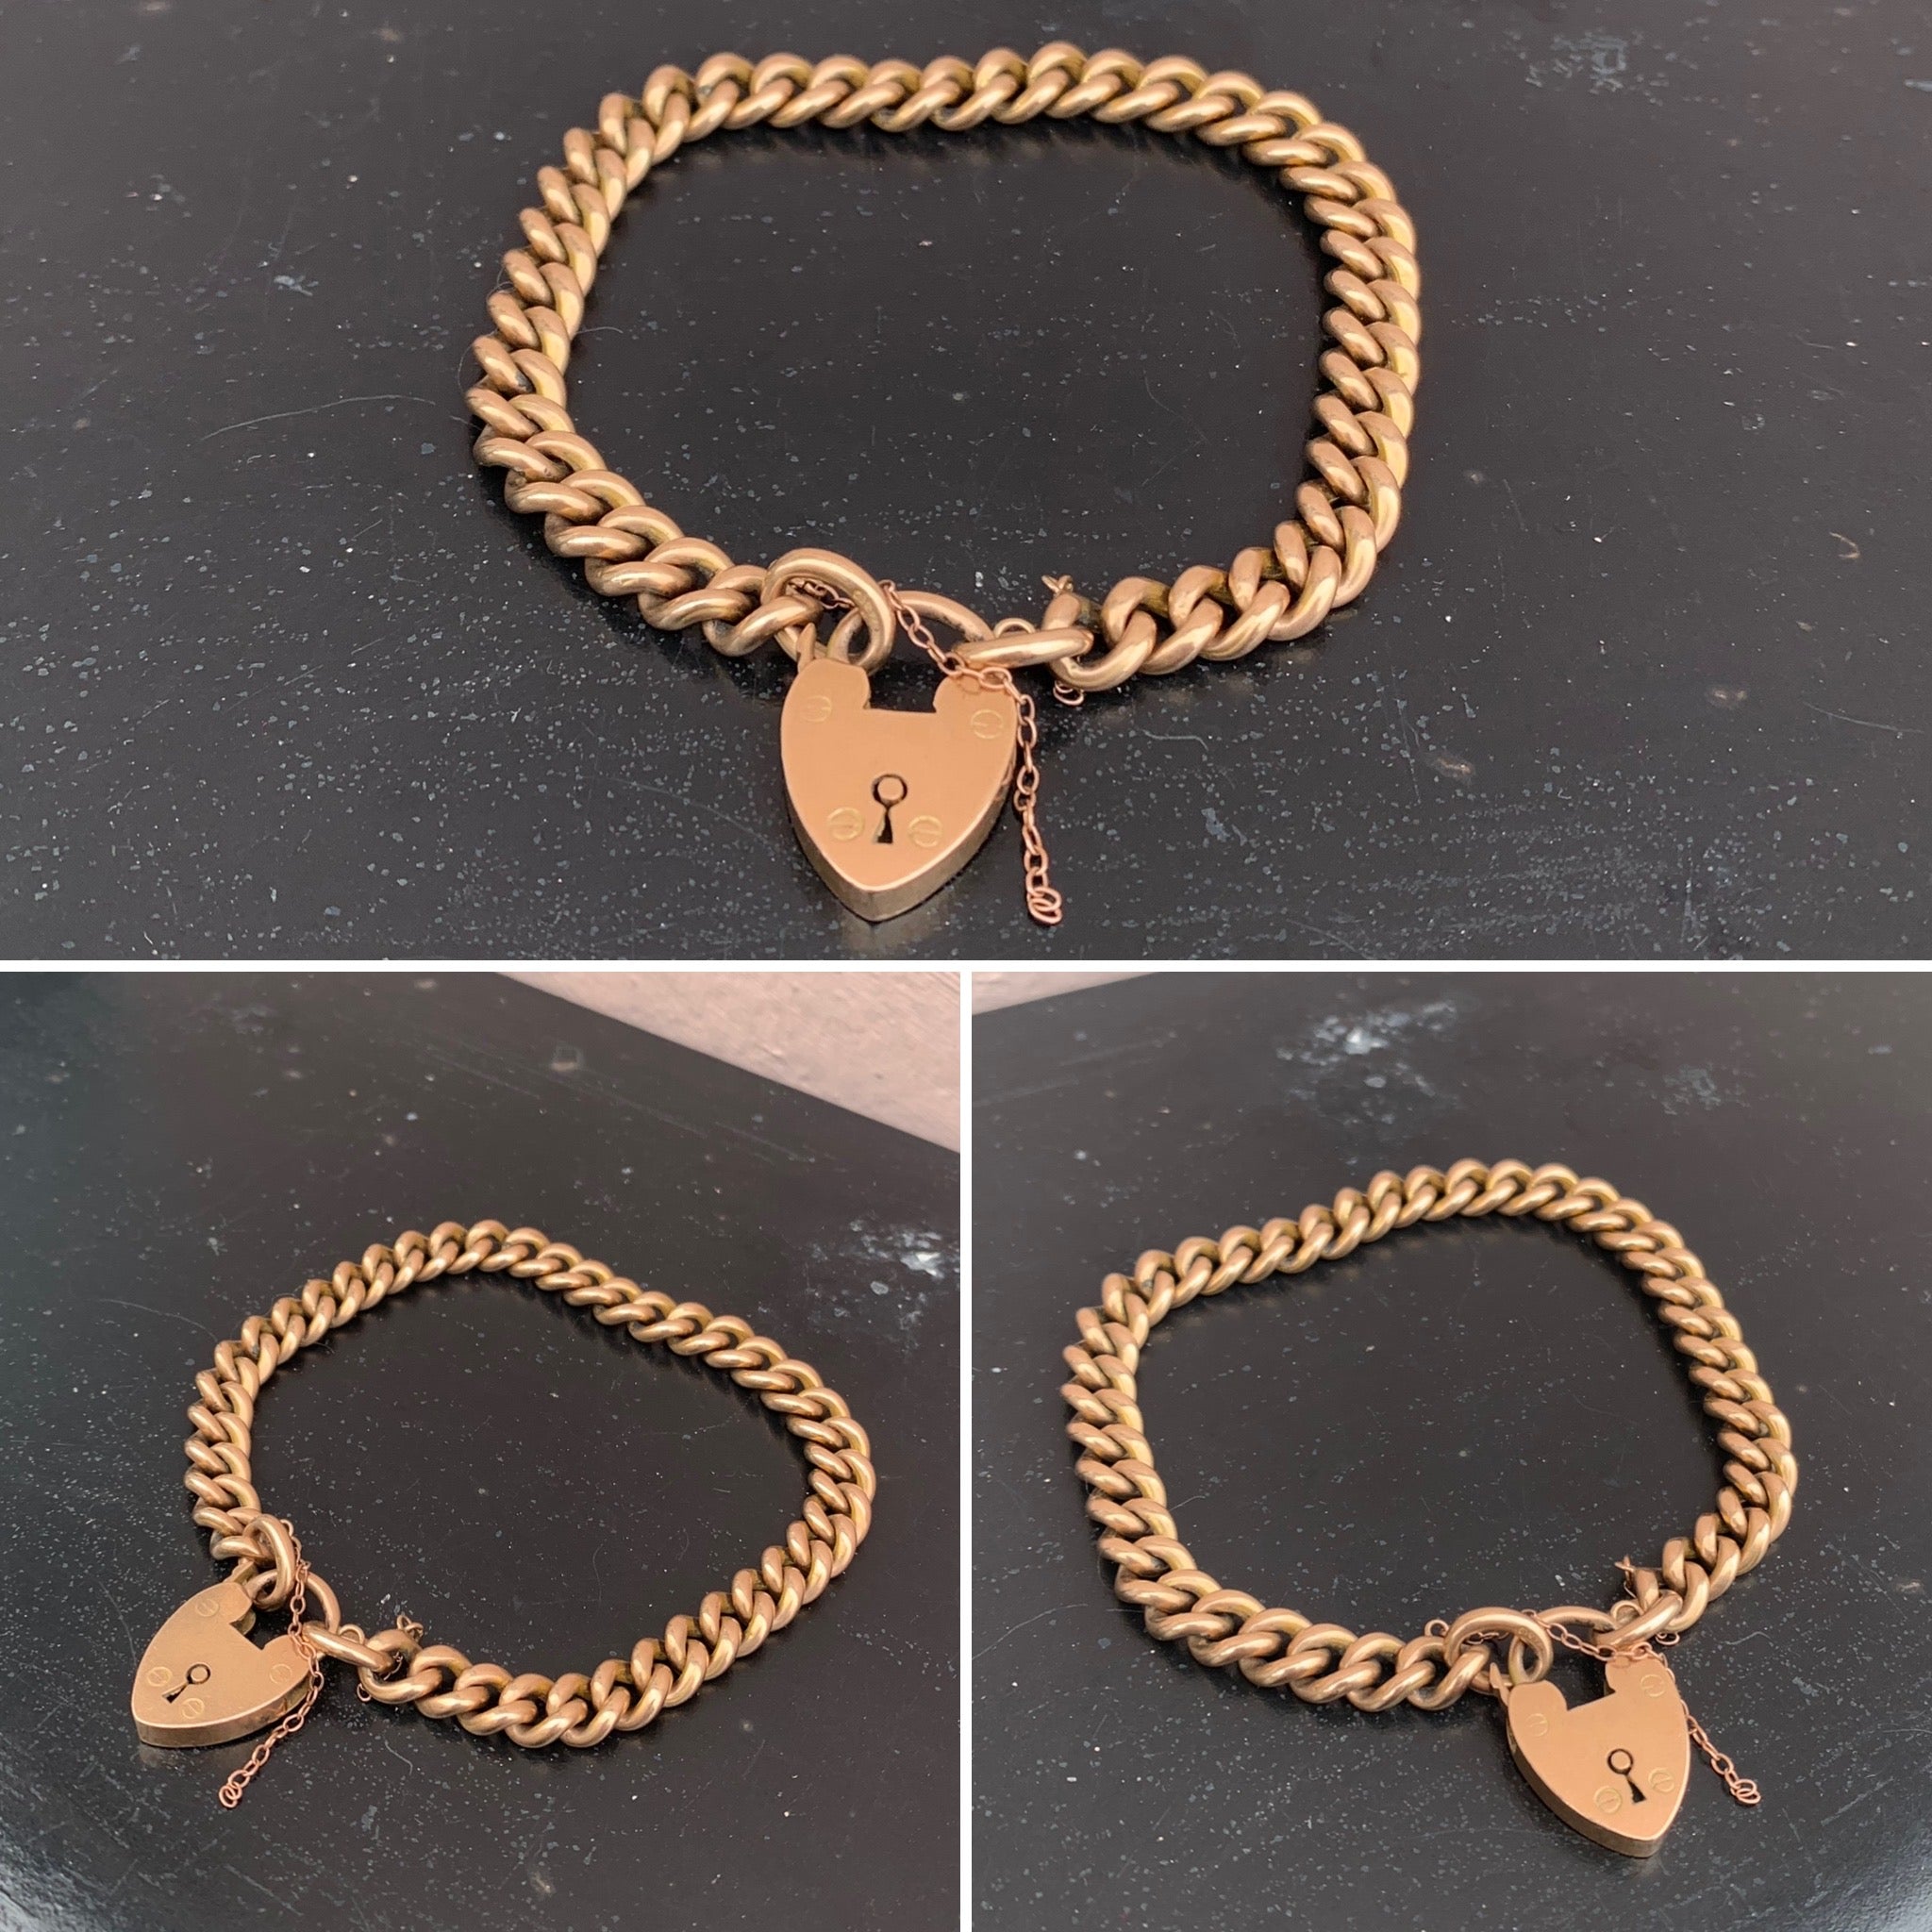 Rose Gold Padlock Bracelet